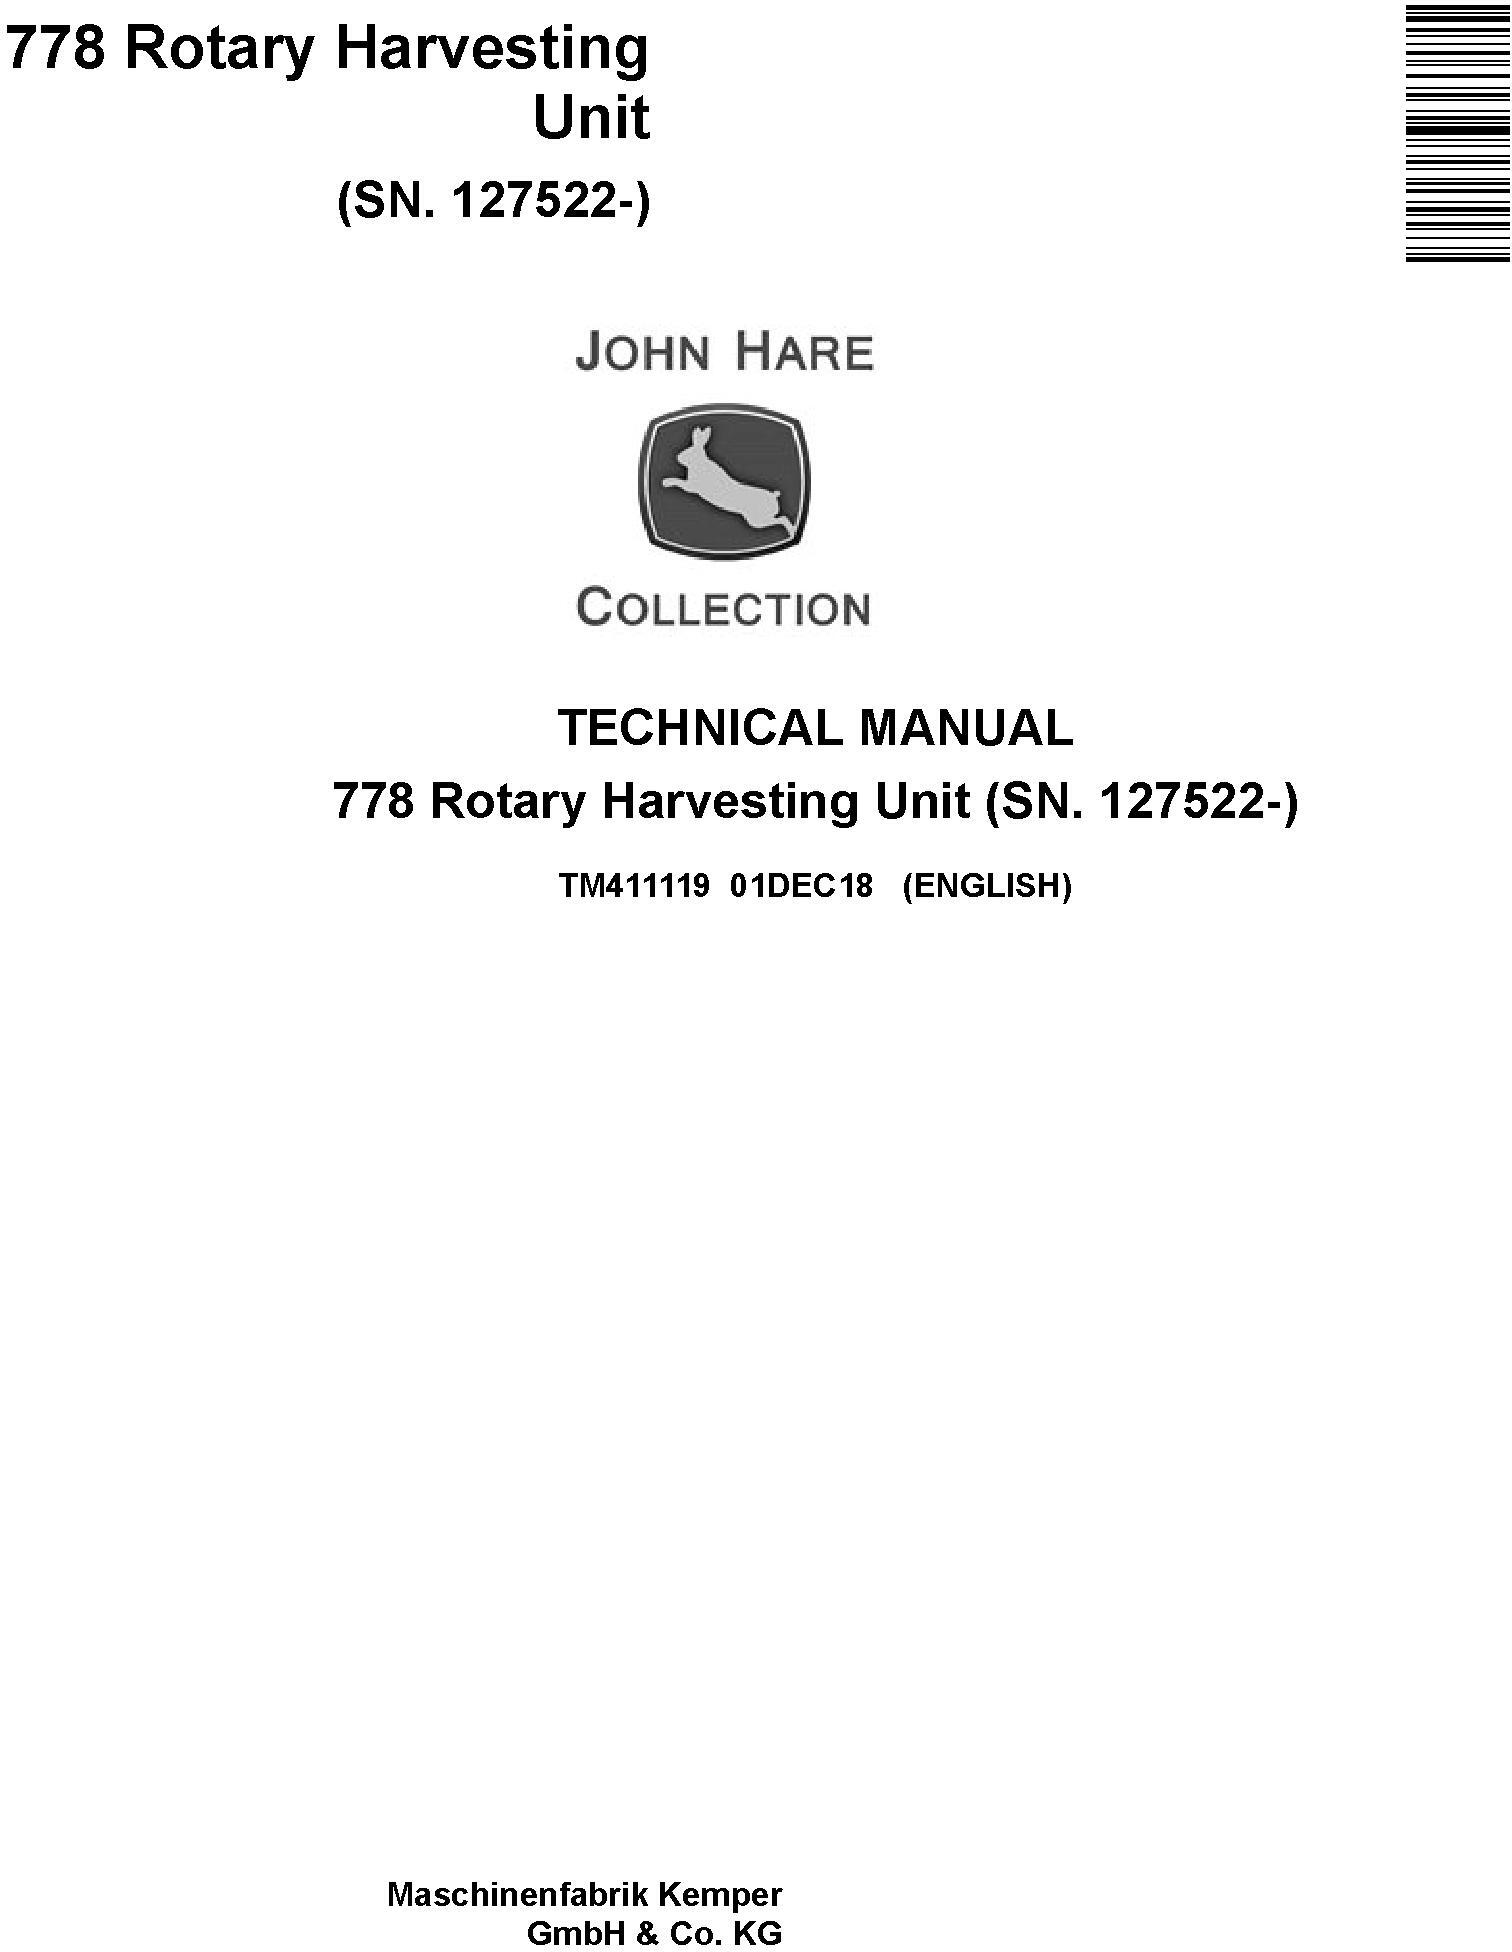 John Deere 778 Rotary Harvesting Unit (SN. 127522-) Technical Manual (TM411119)